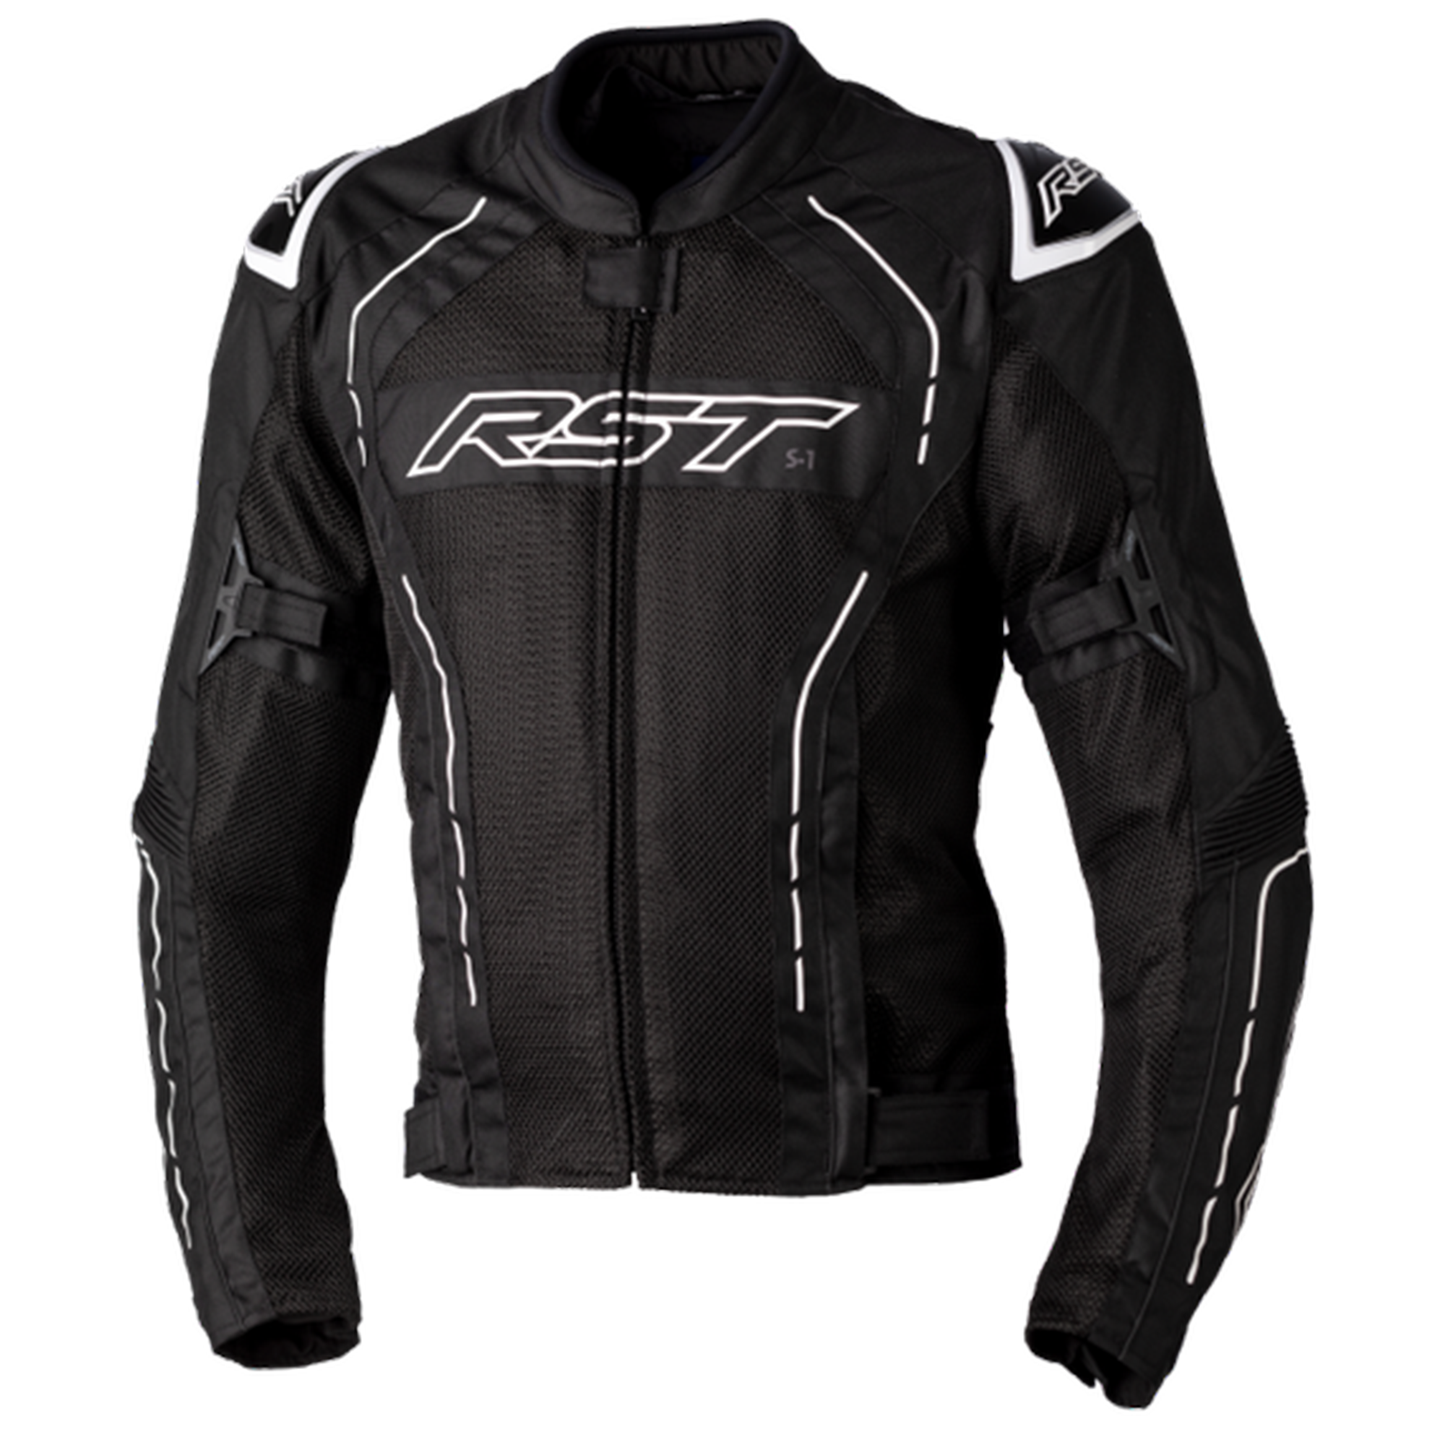 RST S1 Mesh (CE) Men's Textile Jacket - Black/White (3117)